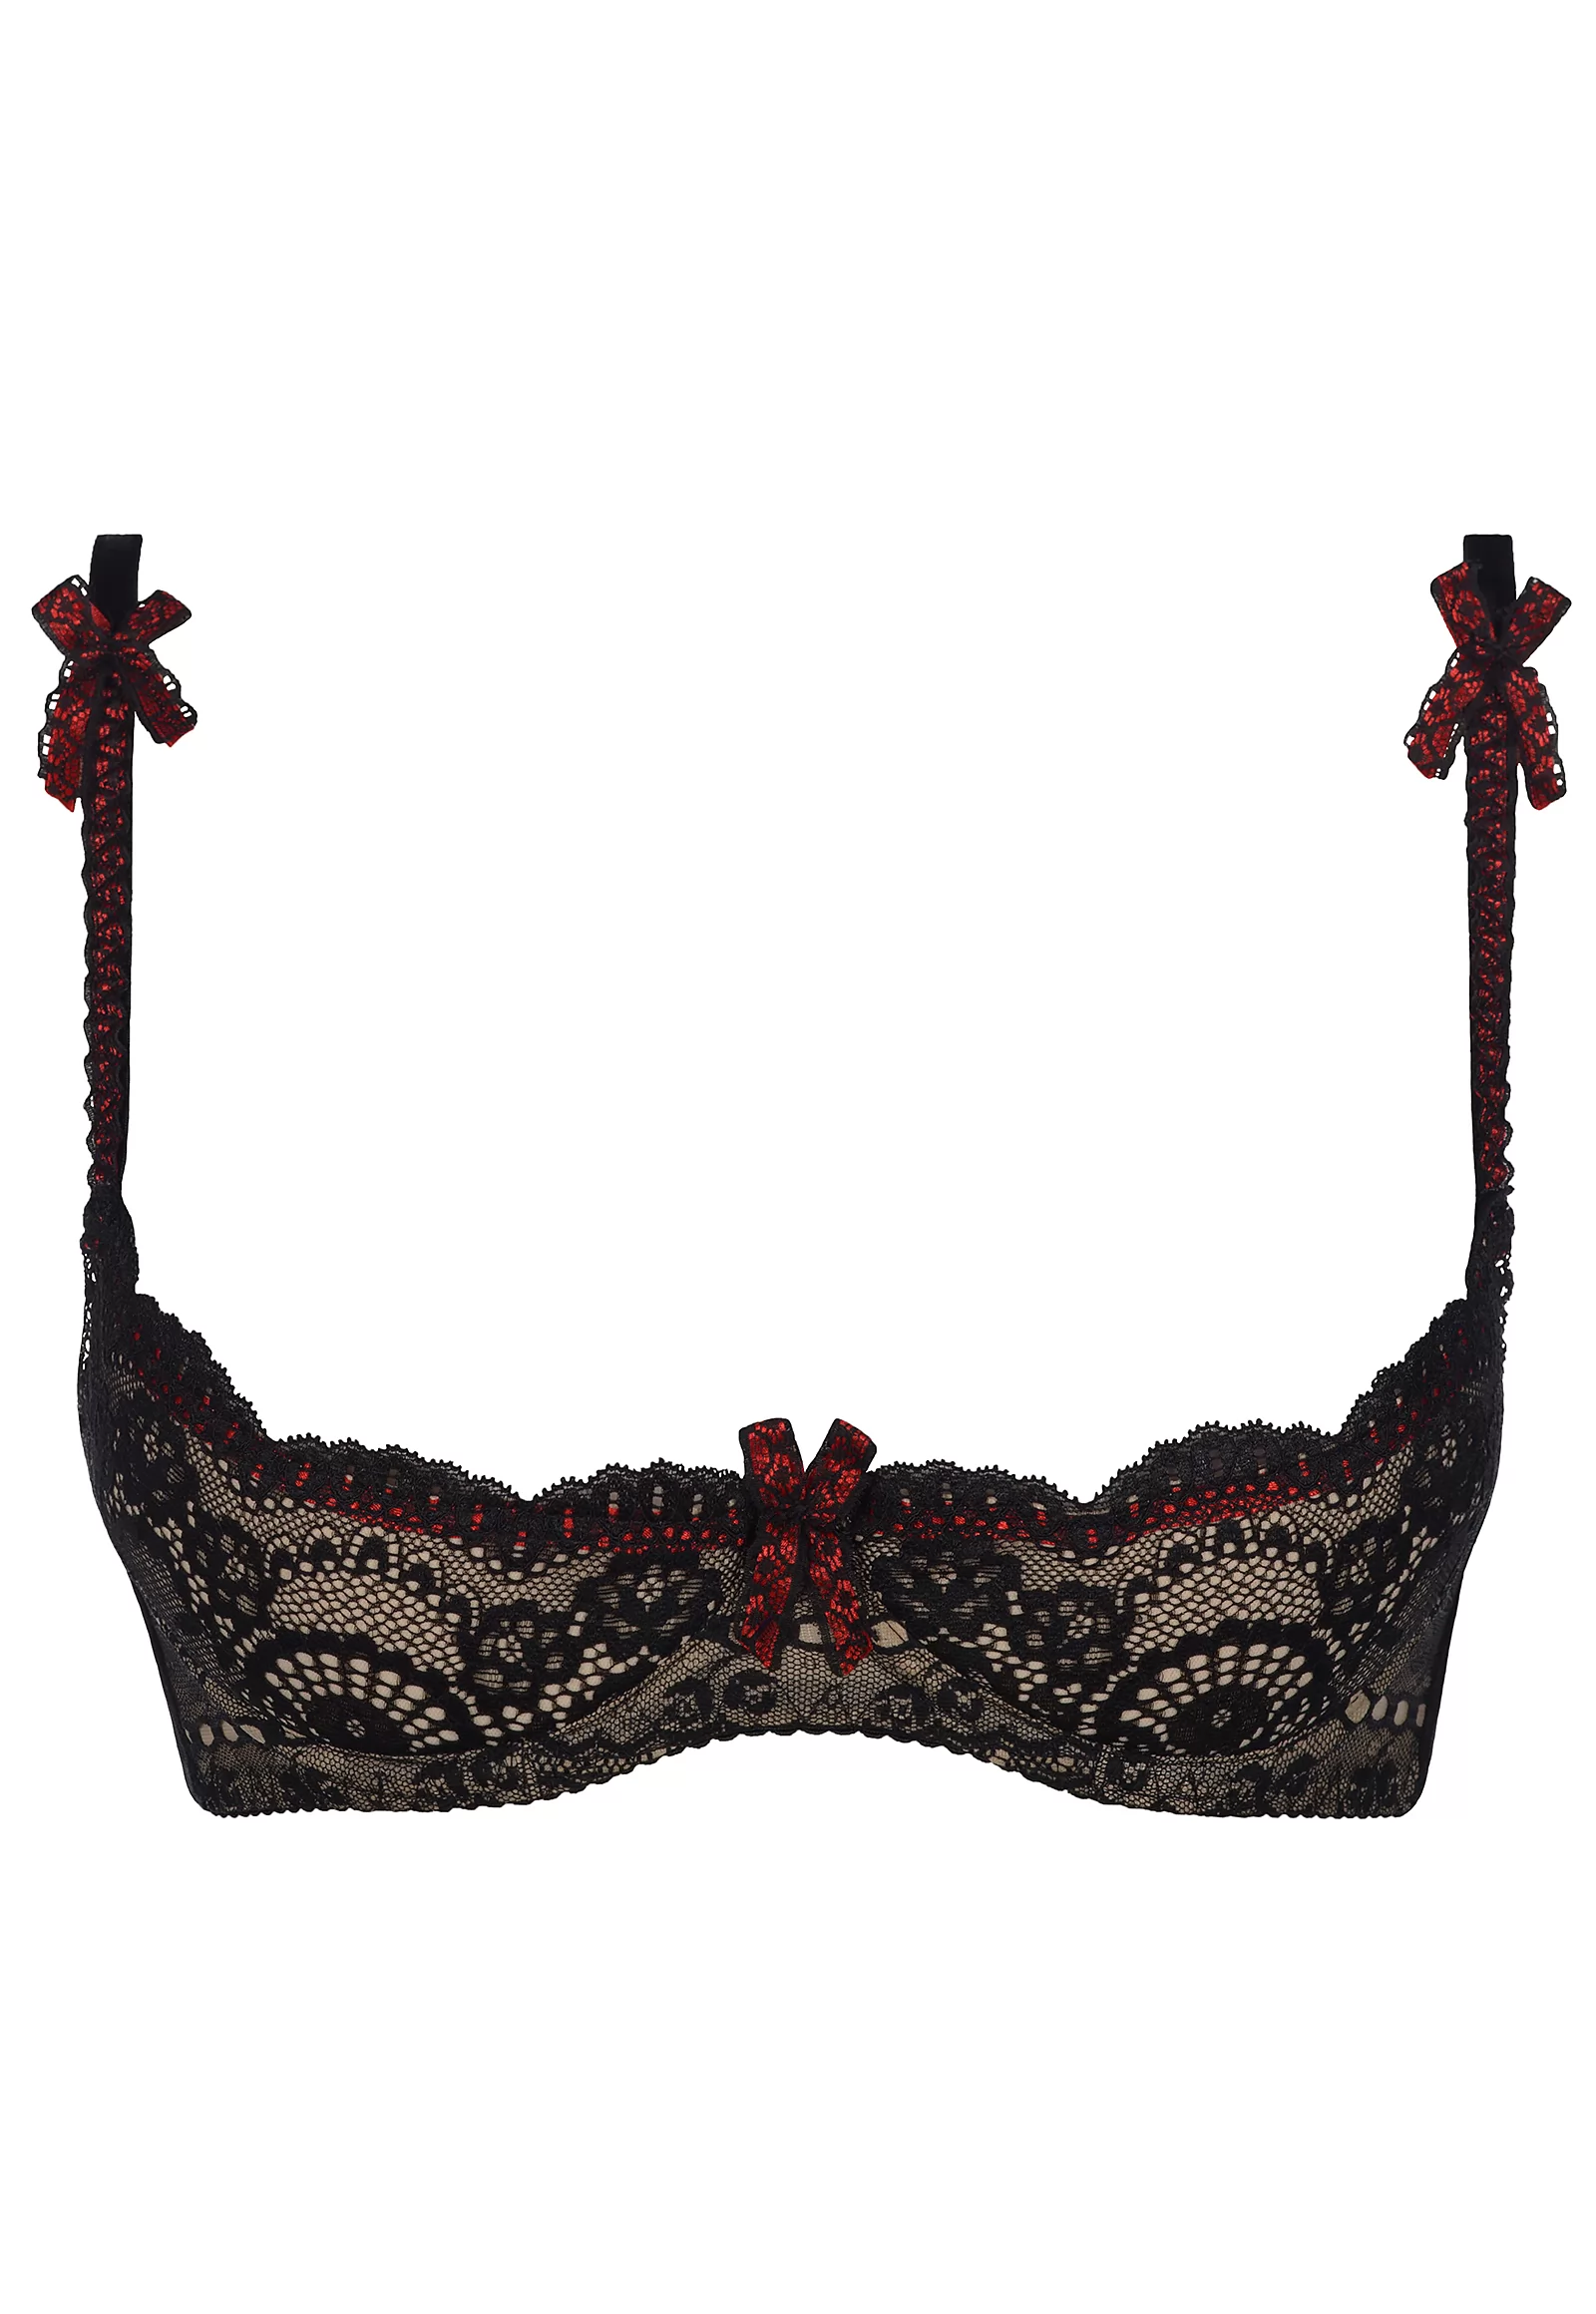 Red black lace shelf bra